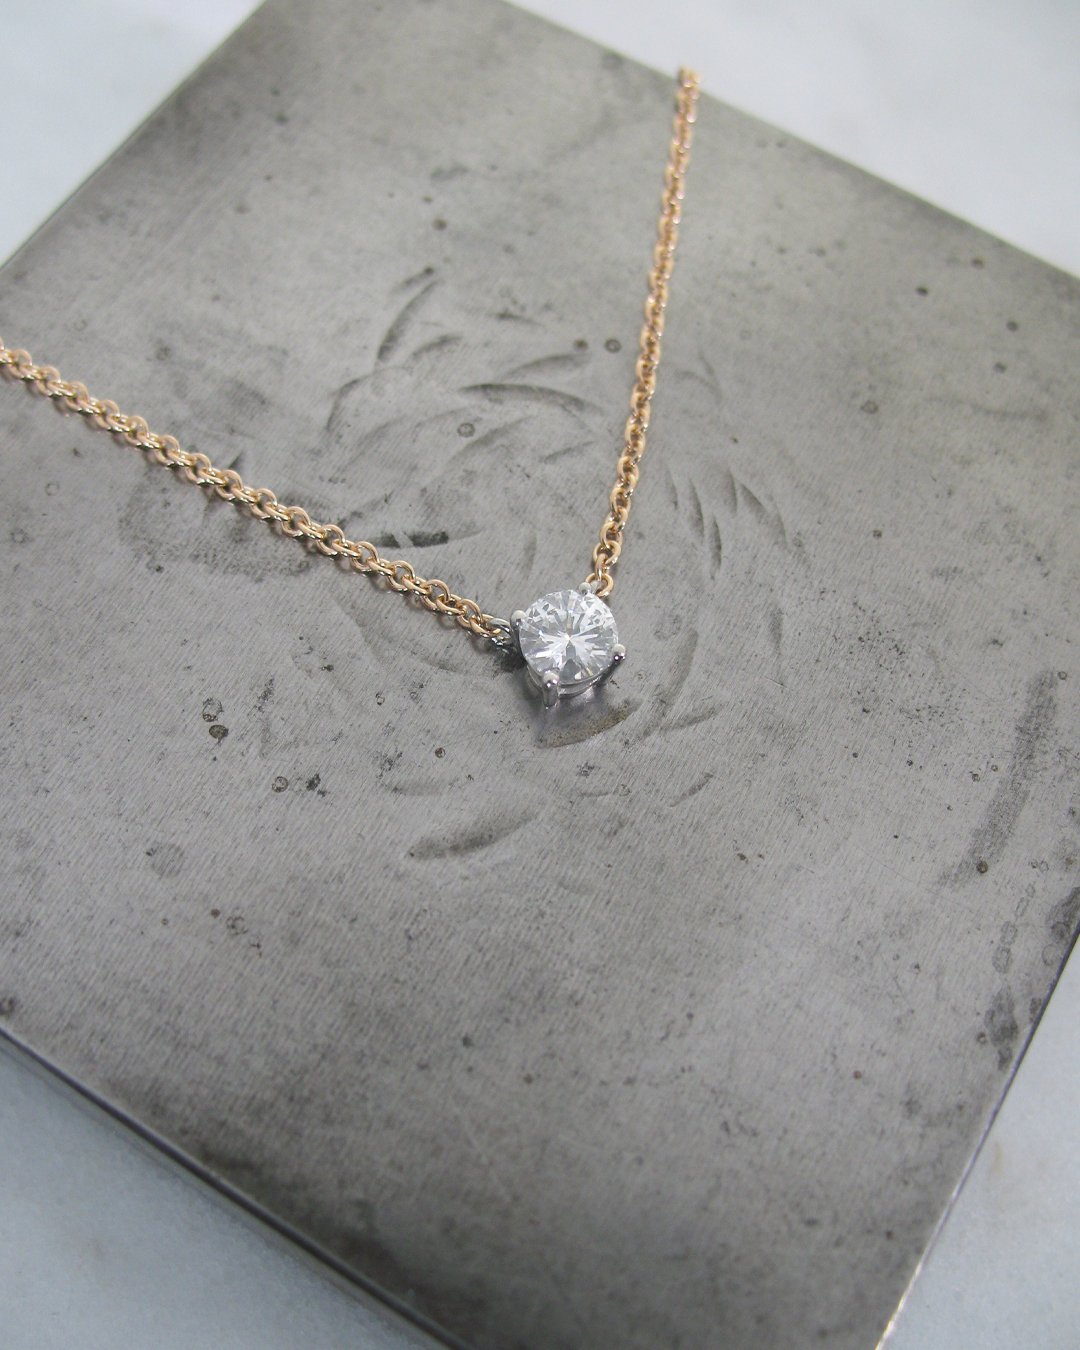 A simple classic diamond solitaire pendant